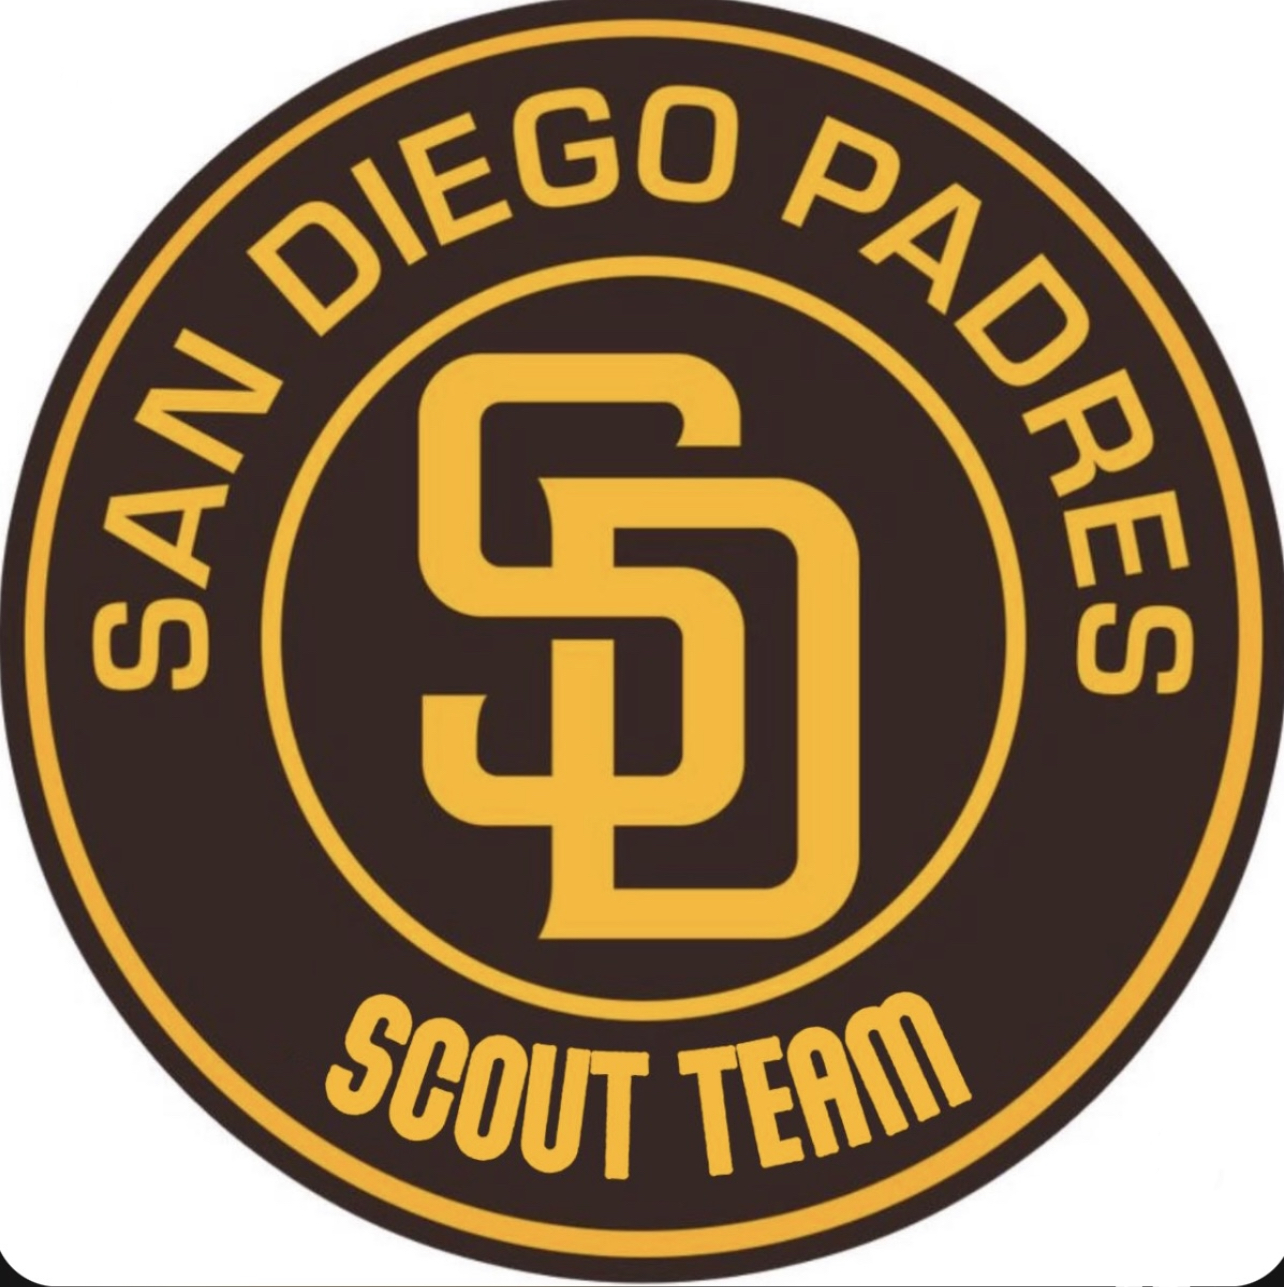 San Diego Padres Scout Team 15u - Perfect Game Baseball Association